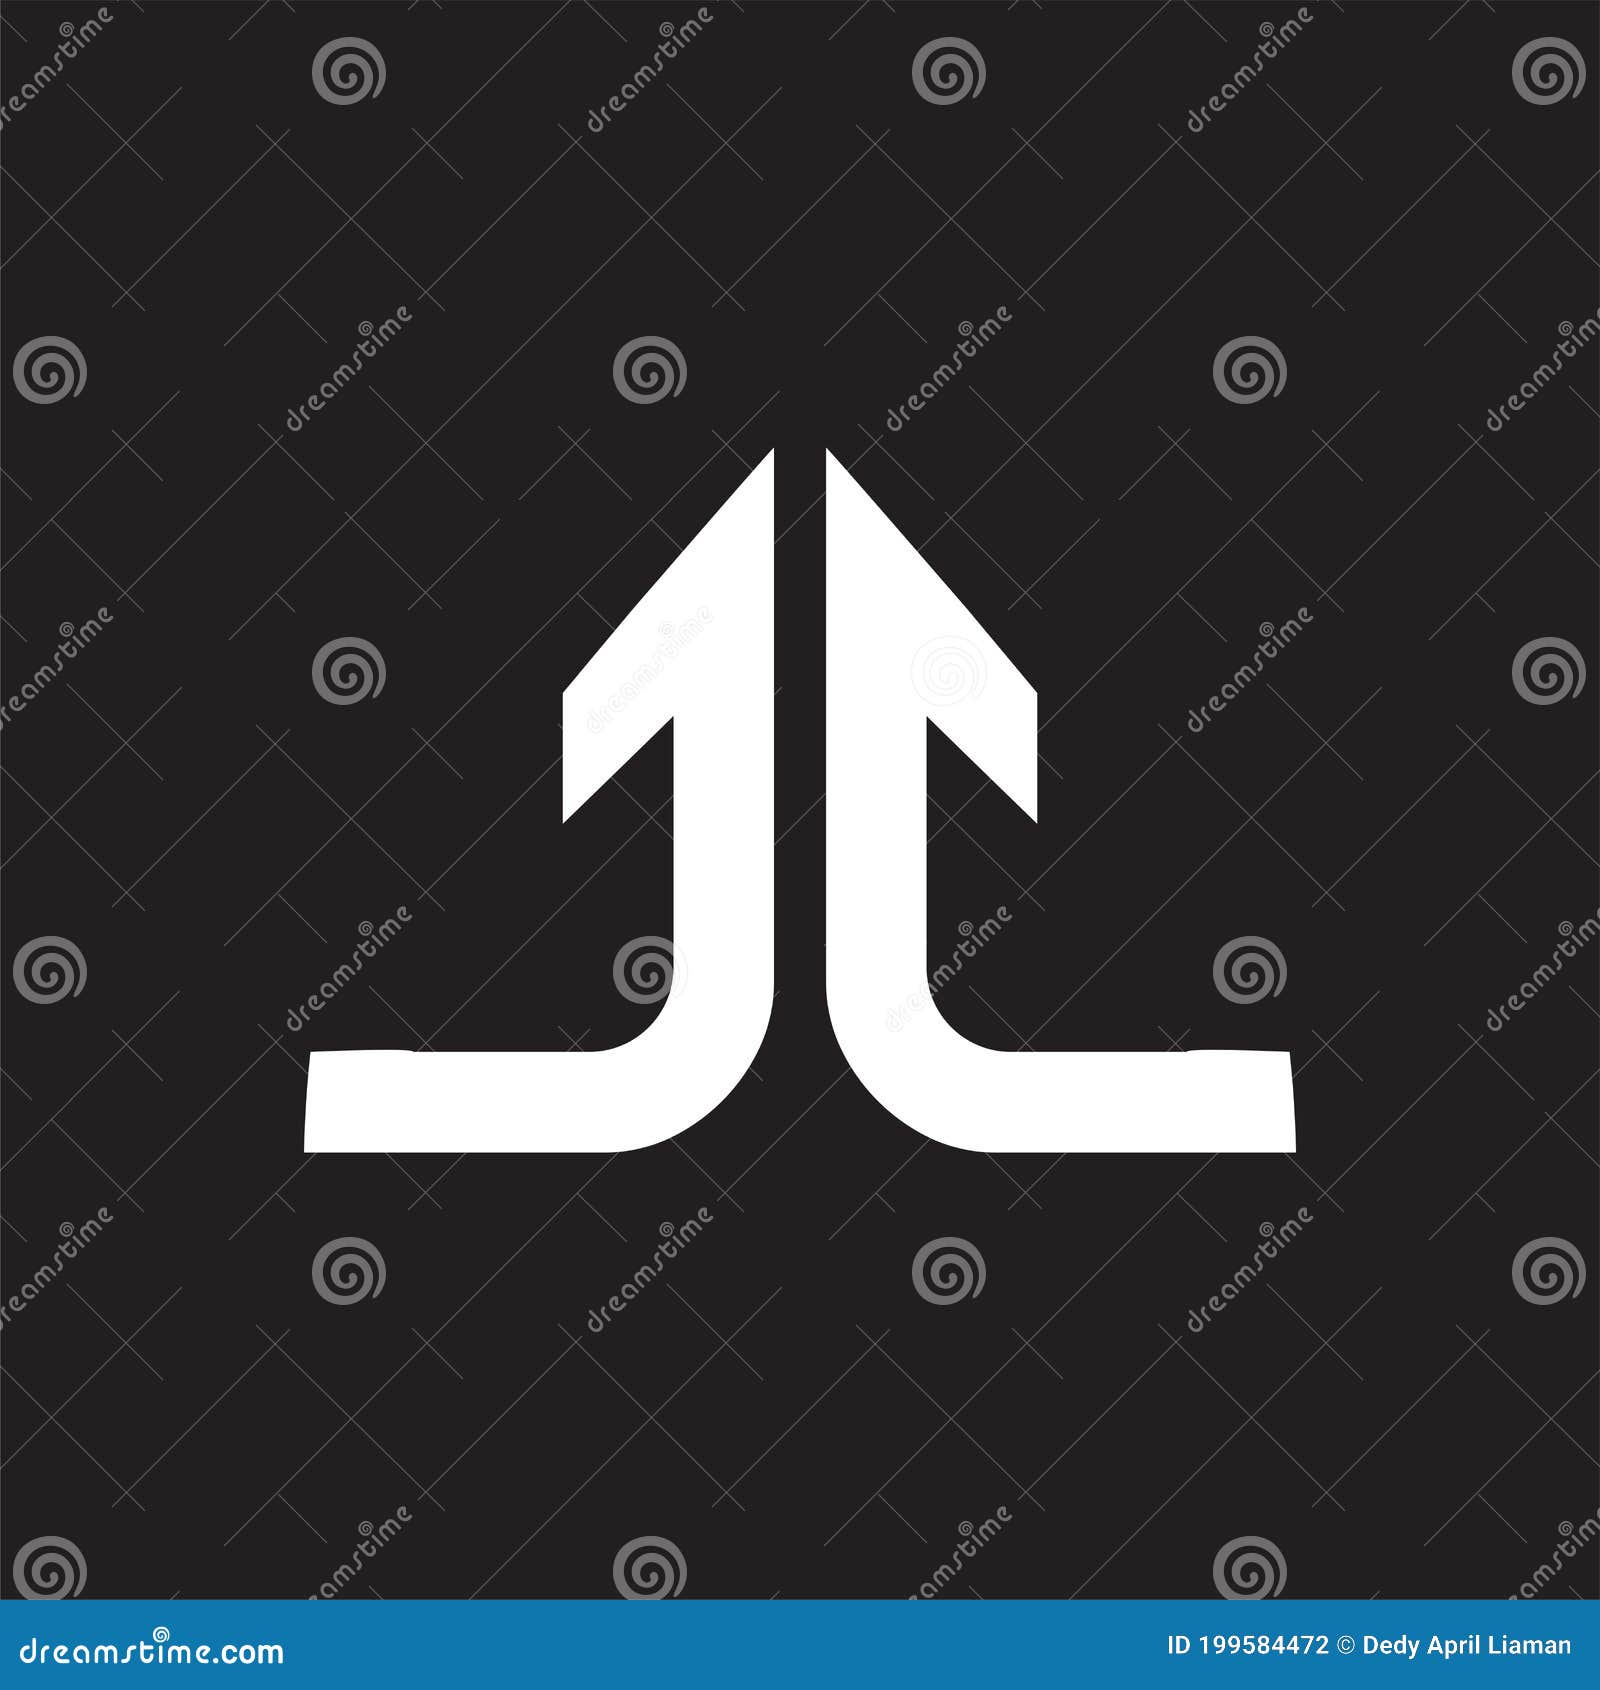 jj up logo letter   for theme or profesional